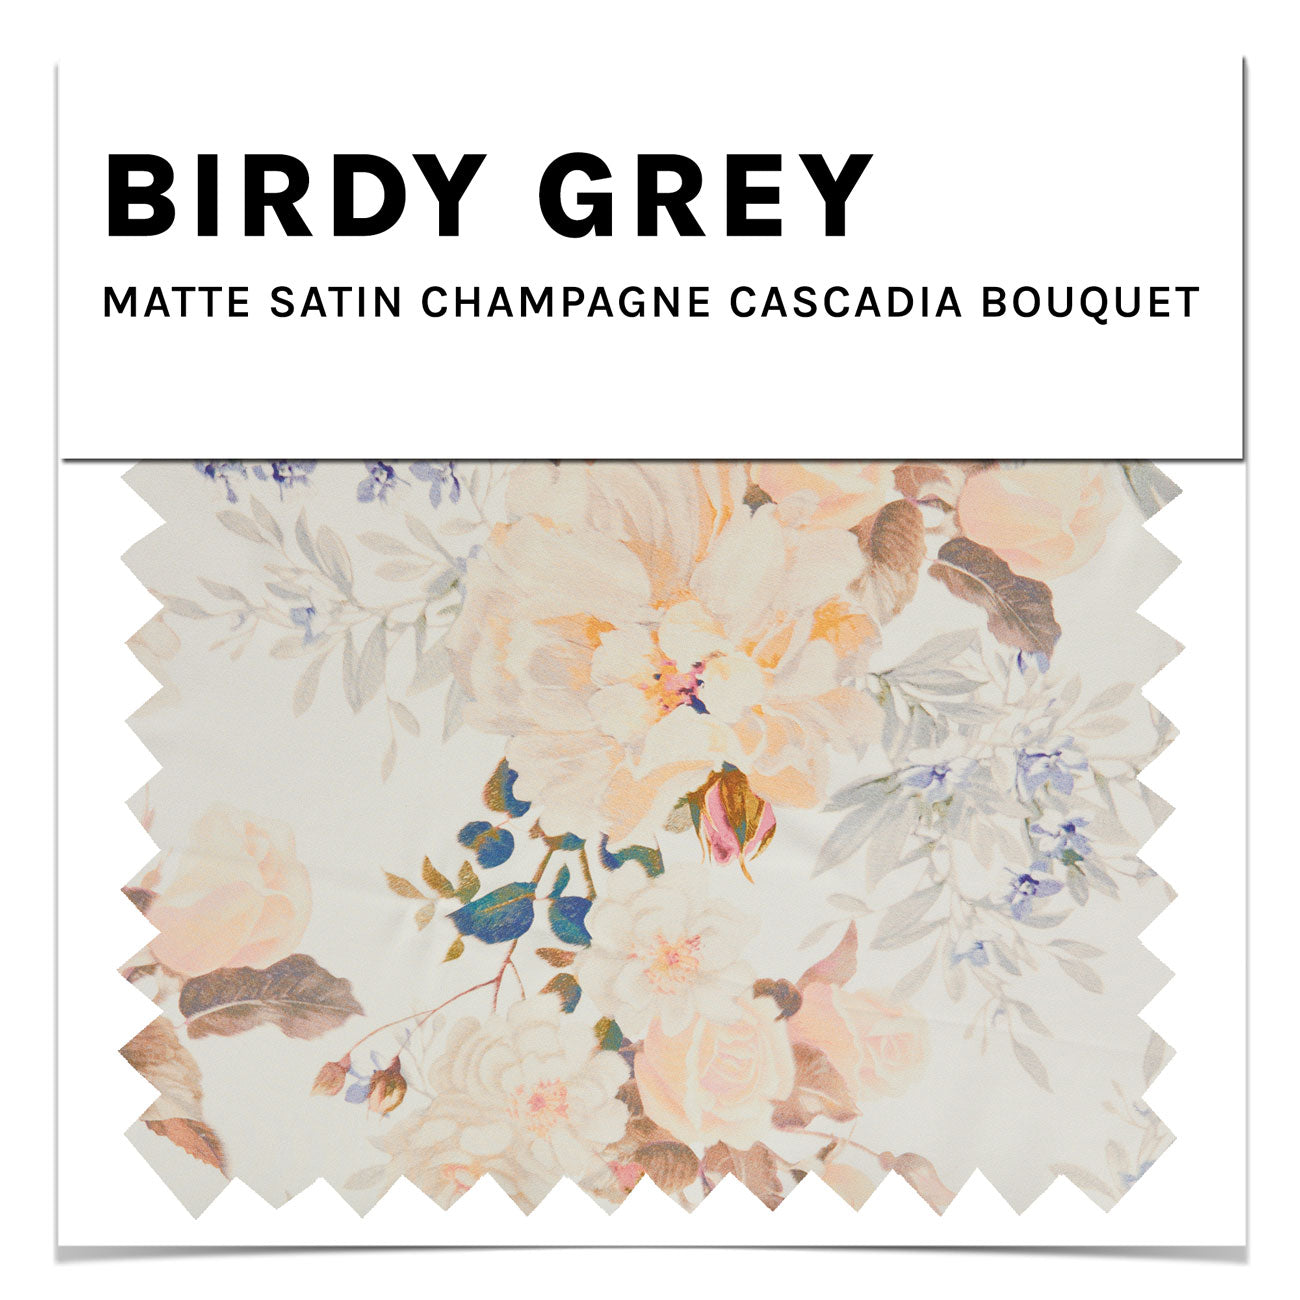 Champagne Cascadia Bouquet Matte Satin Swatch by Birdy Grey